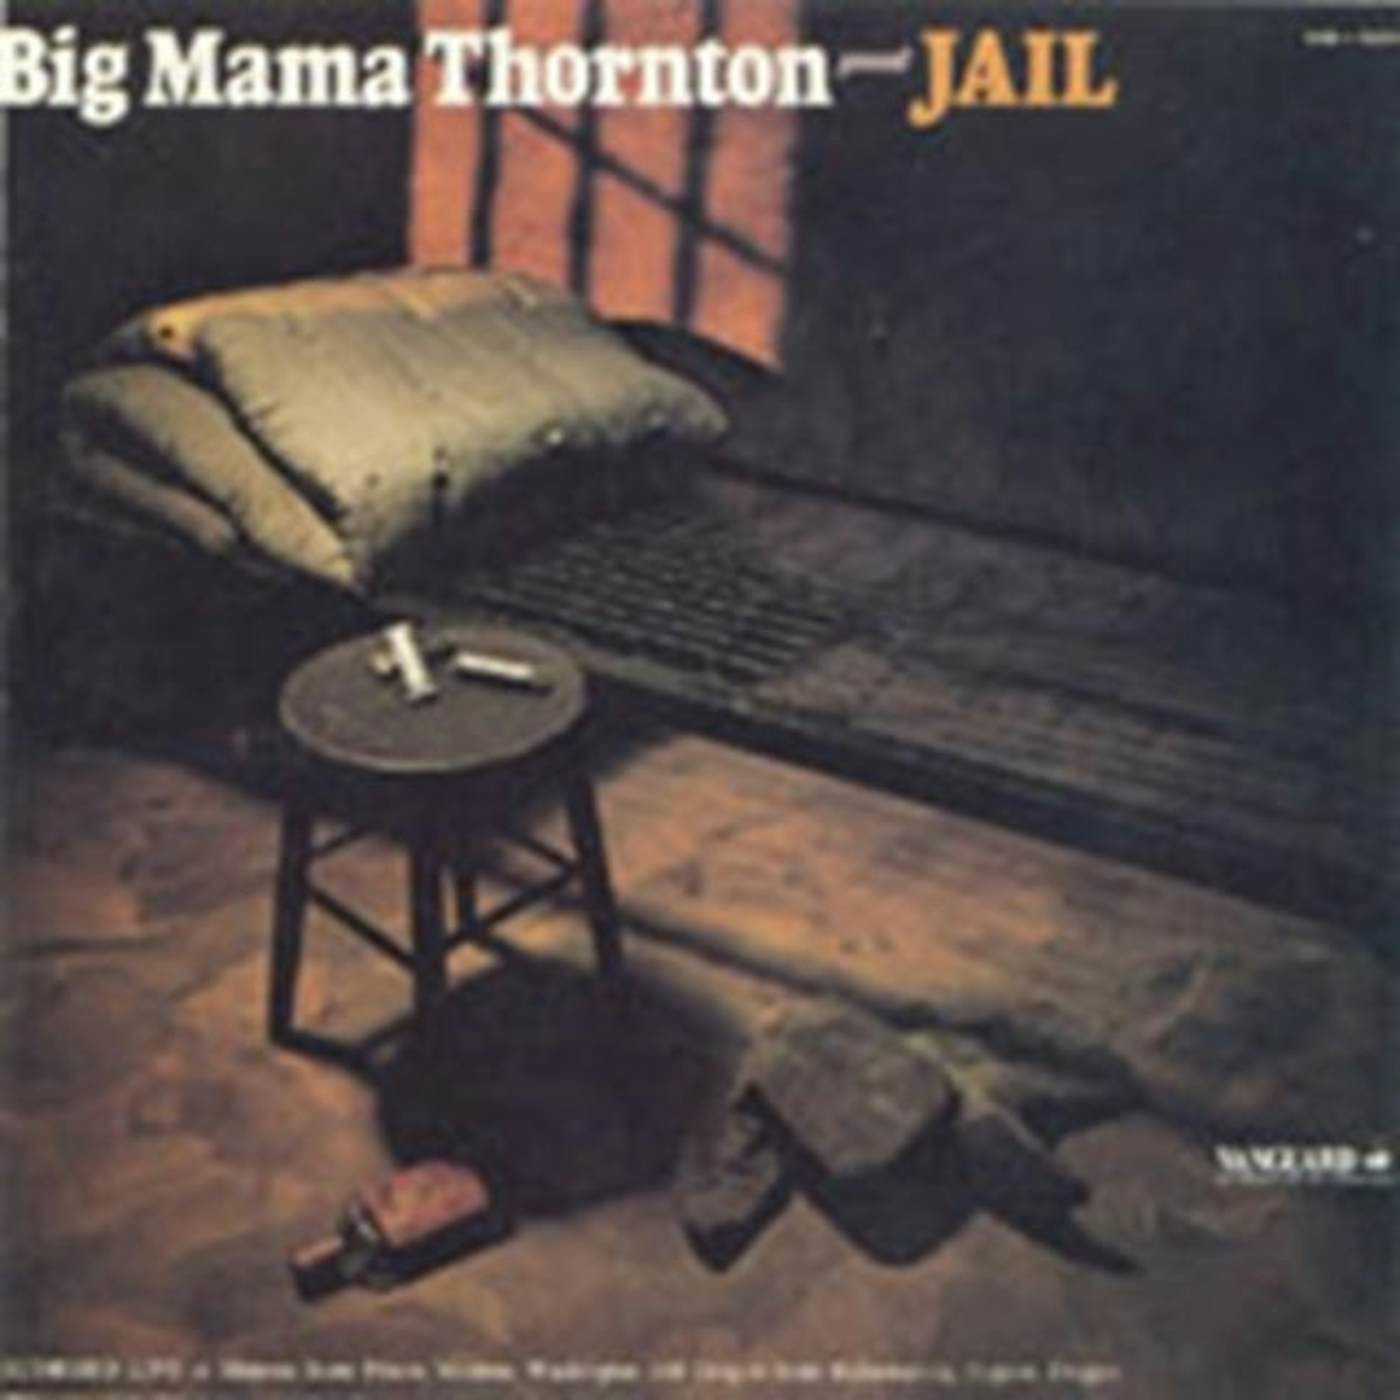 Big Mama Thornton CD - Jail